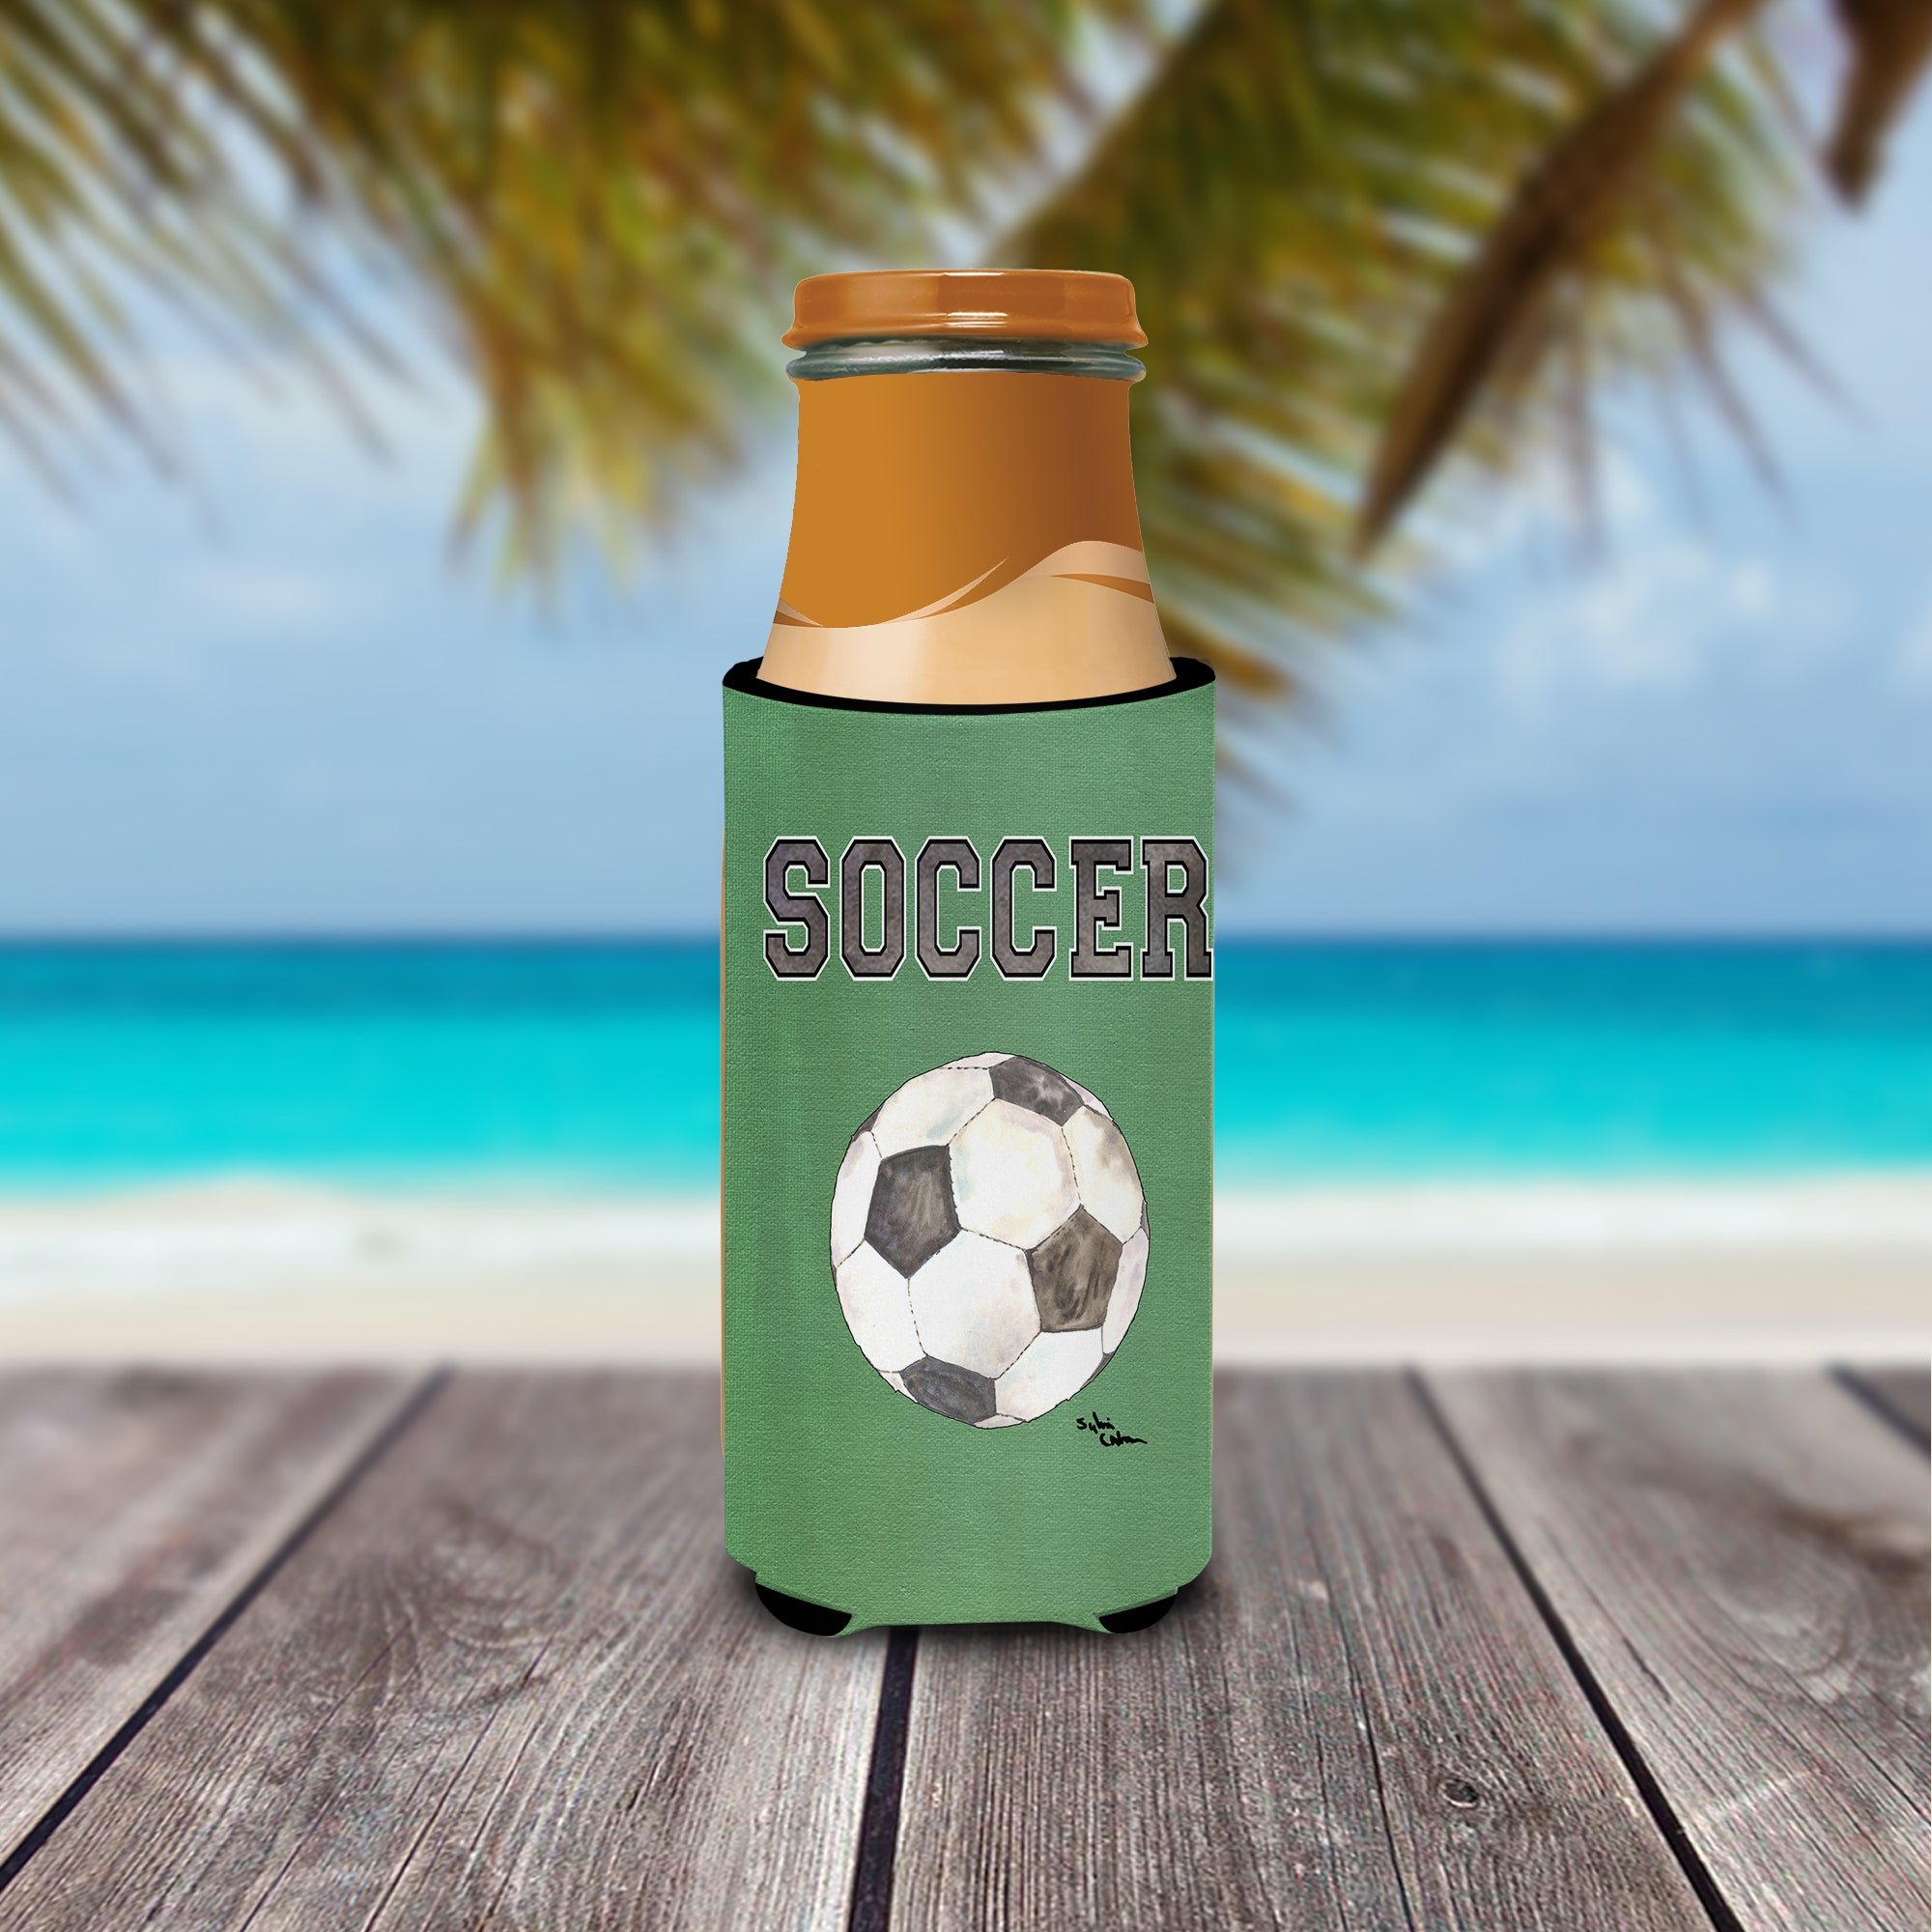 Soccer Ultra Beverage Insulators for slim cans 8484MUK.